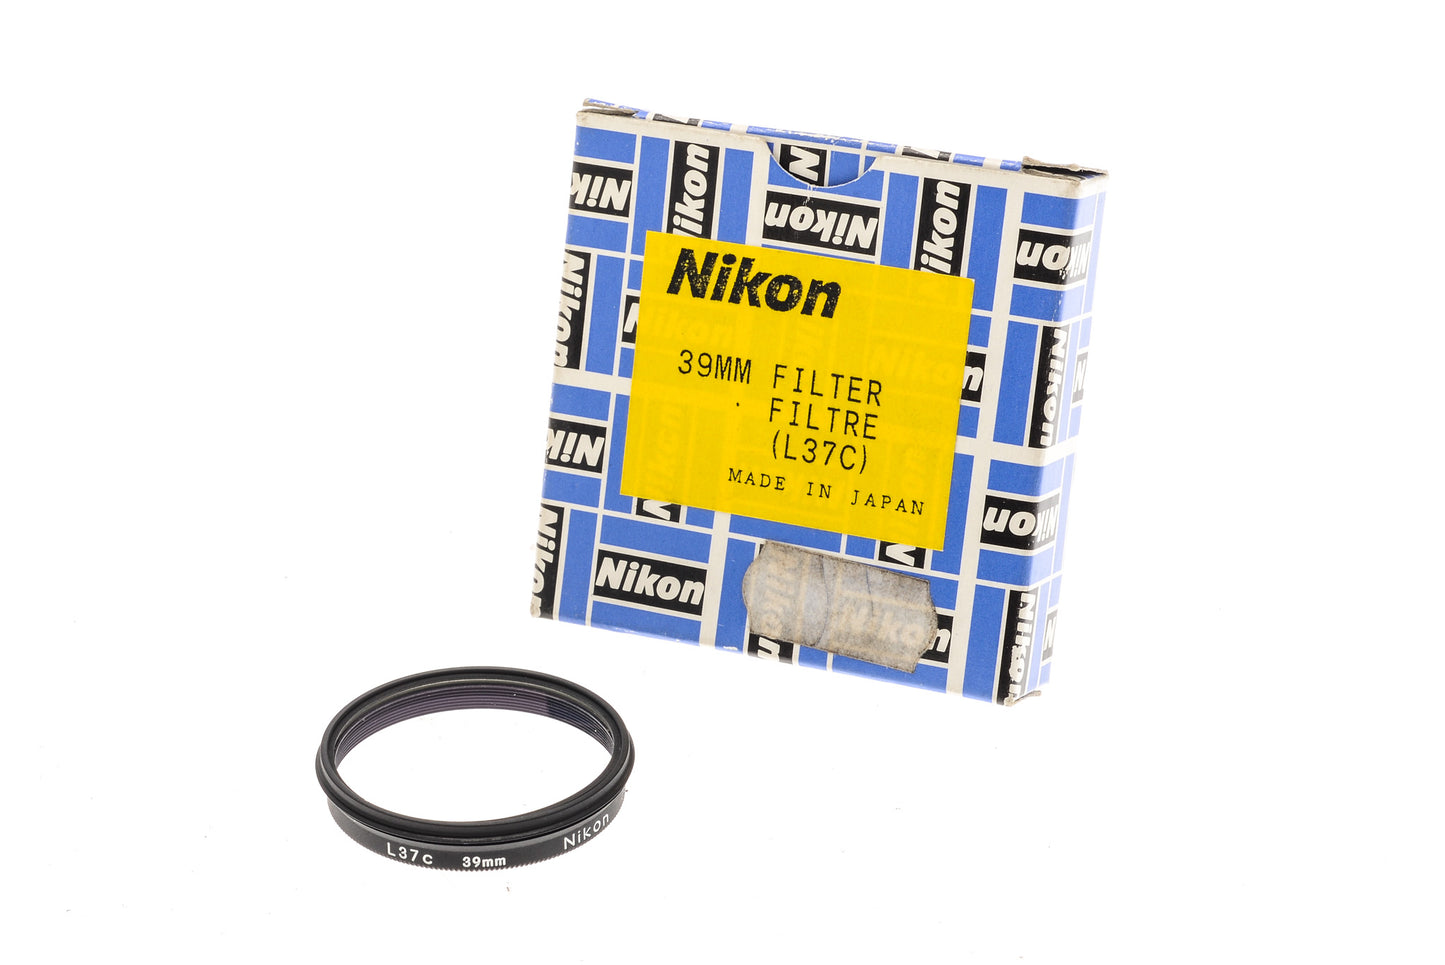 Nikon 39mm Rear UV Filter L37c - Accessory